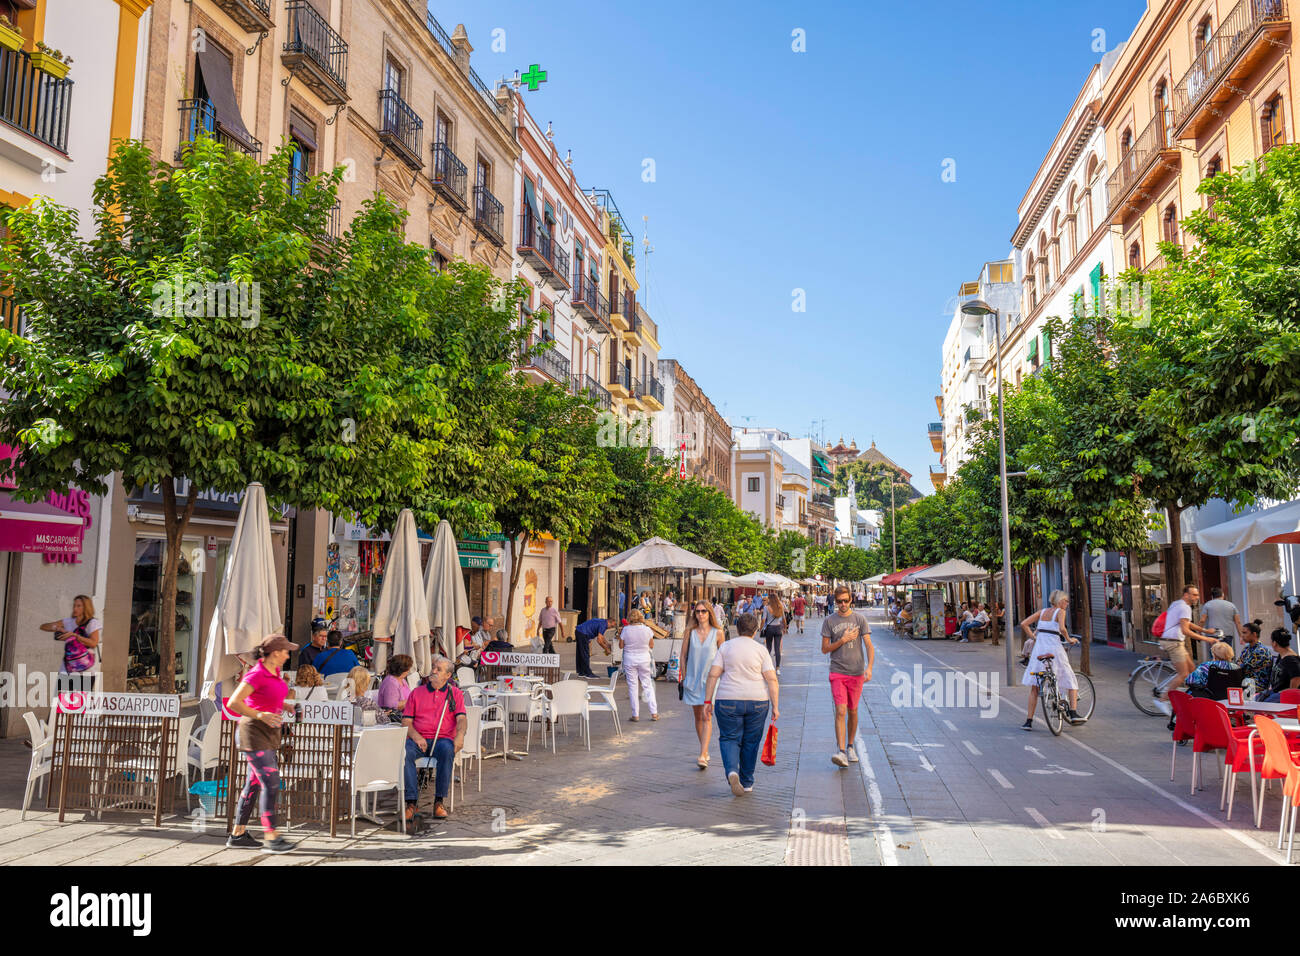 Street Cafe auf der Calle San Jacinto Hauptstraße im Stadtteil Triana in Sevilla Sevilla Sevilla Spanien Sevilla Andalusien Spanien EU Europa Stockfoto